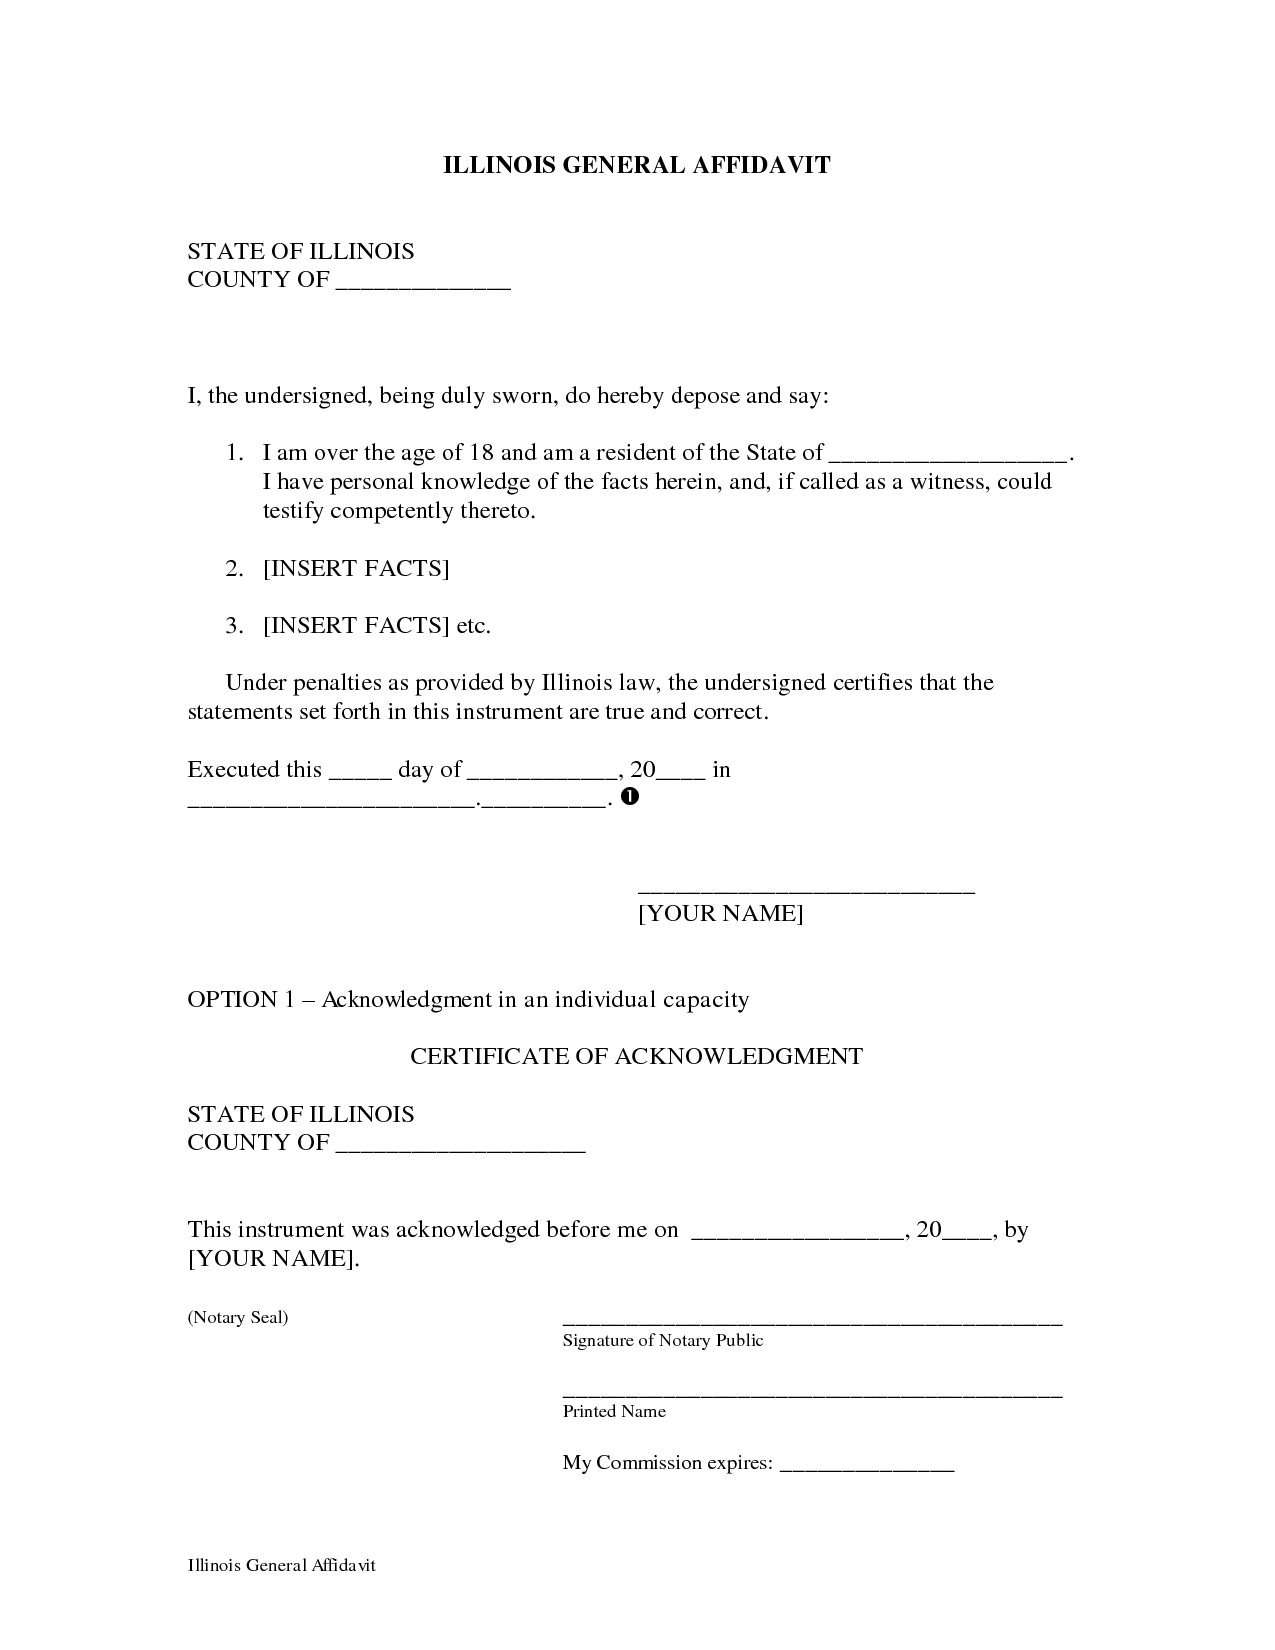 general-affidavit-form-free-printable-documents